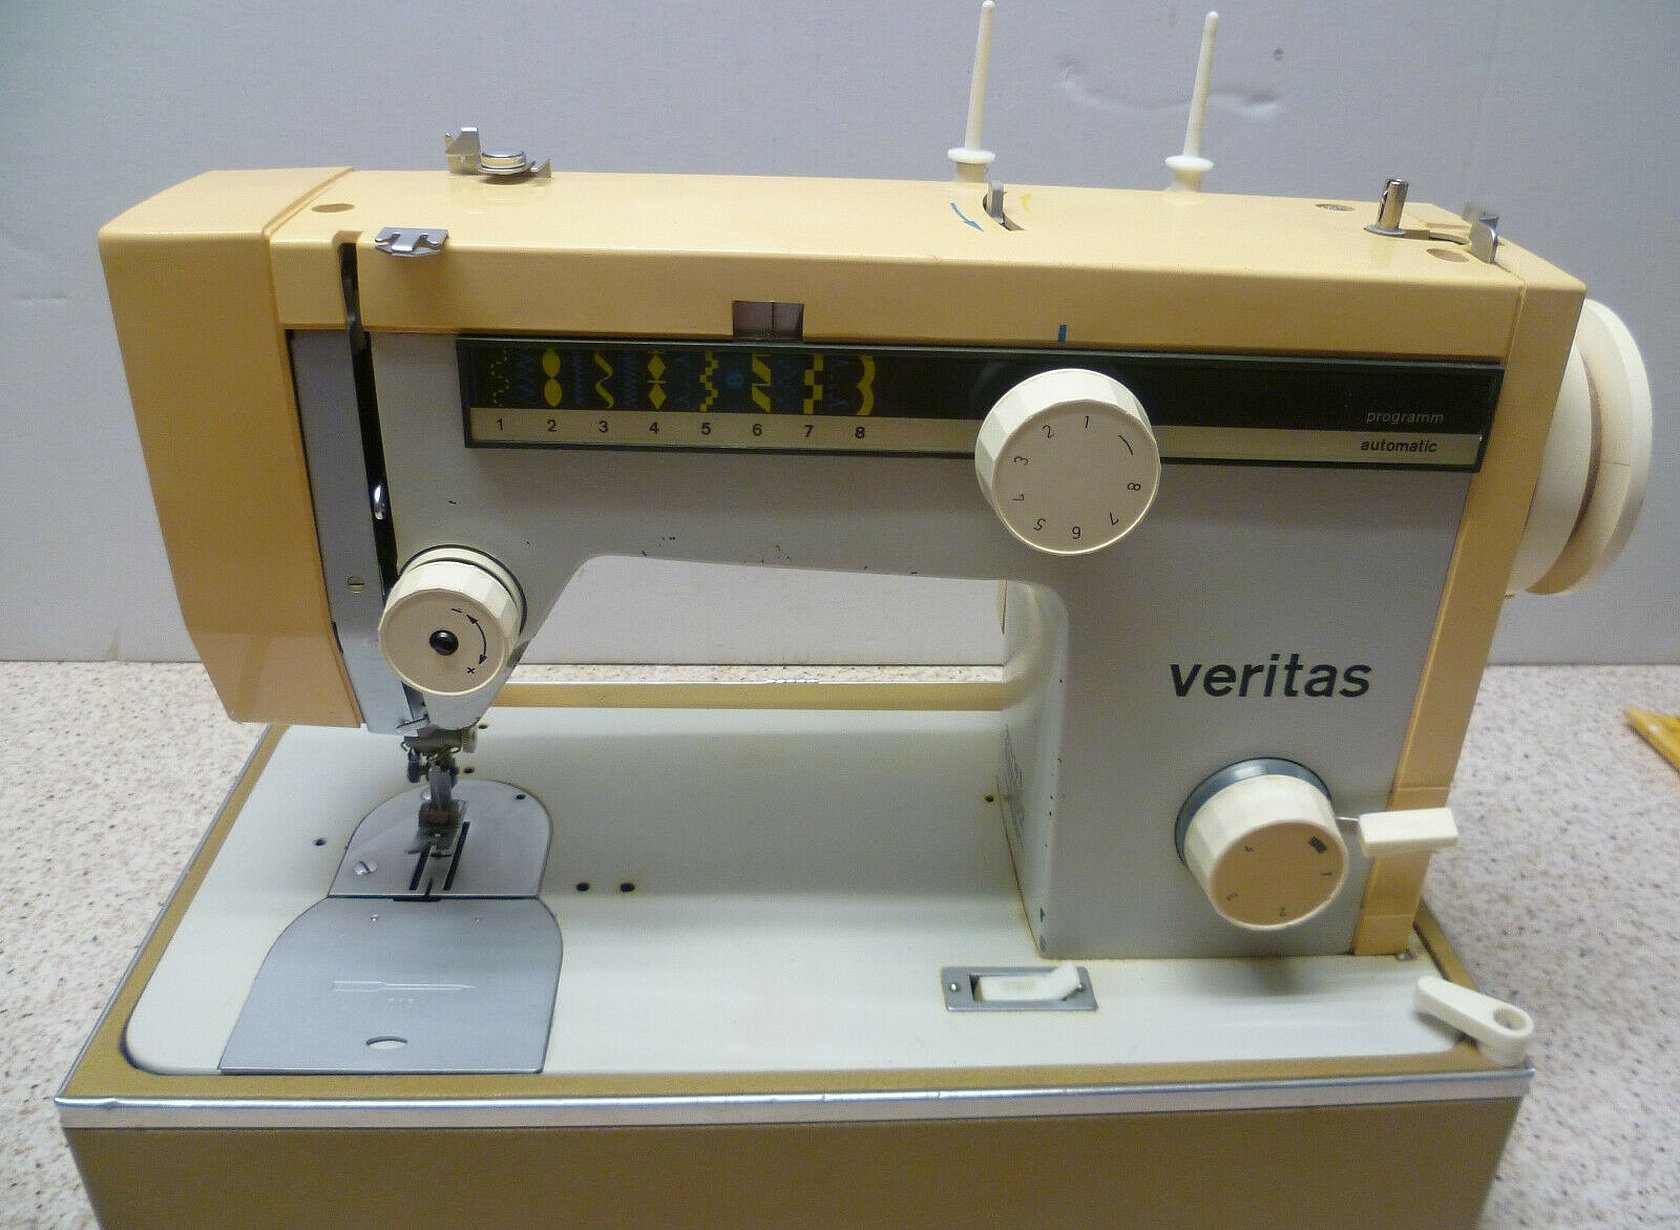 Veritas est. Швейная машина Веритас 8024\32. Веритас швейная машина 8014/43. Швейная машинка Веритас veritas. Швейная машинка veritas 8014.